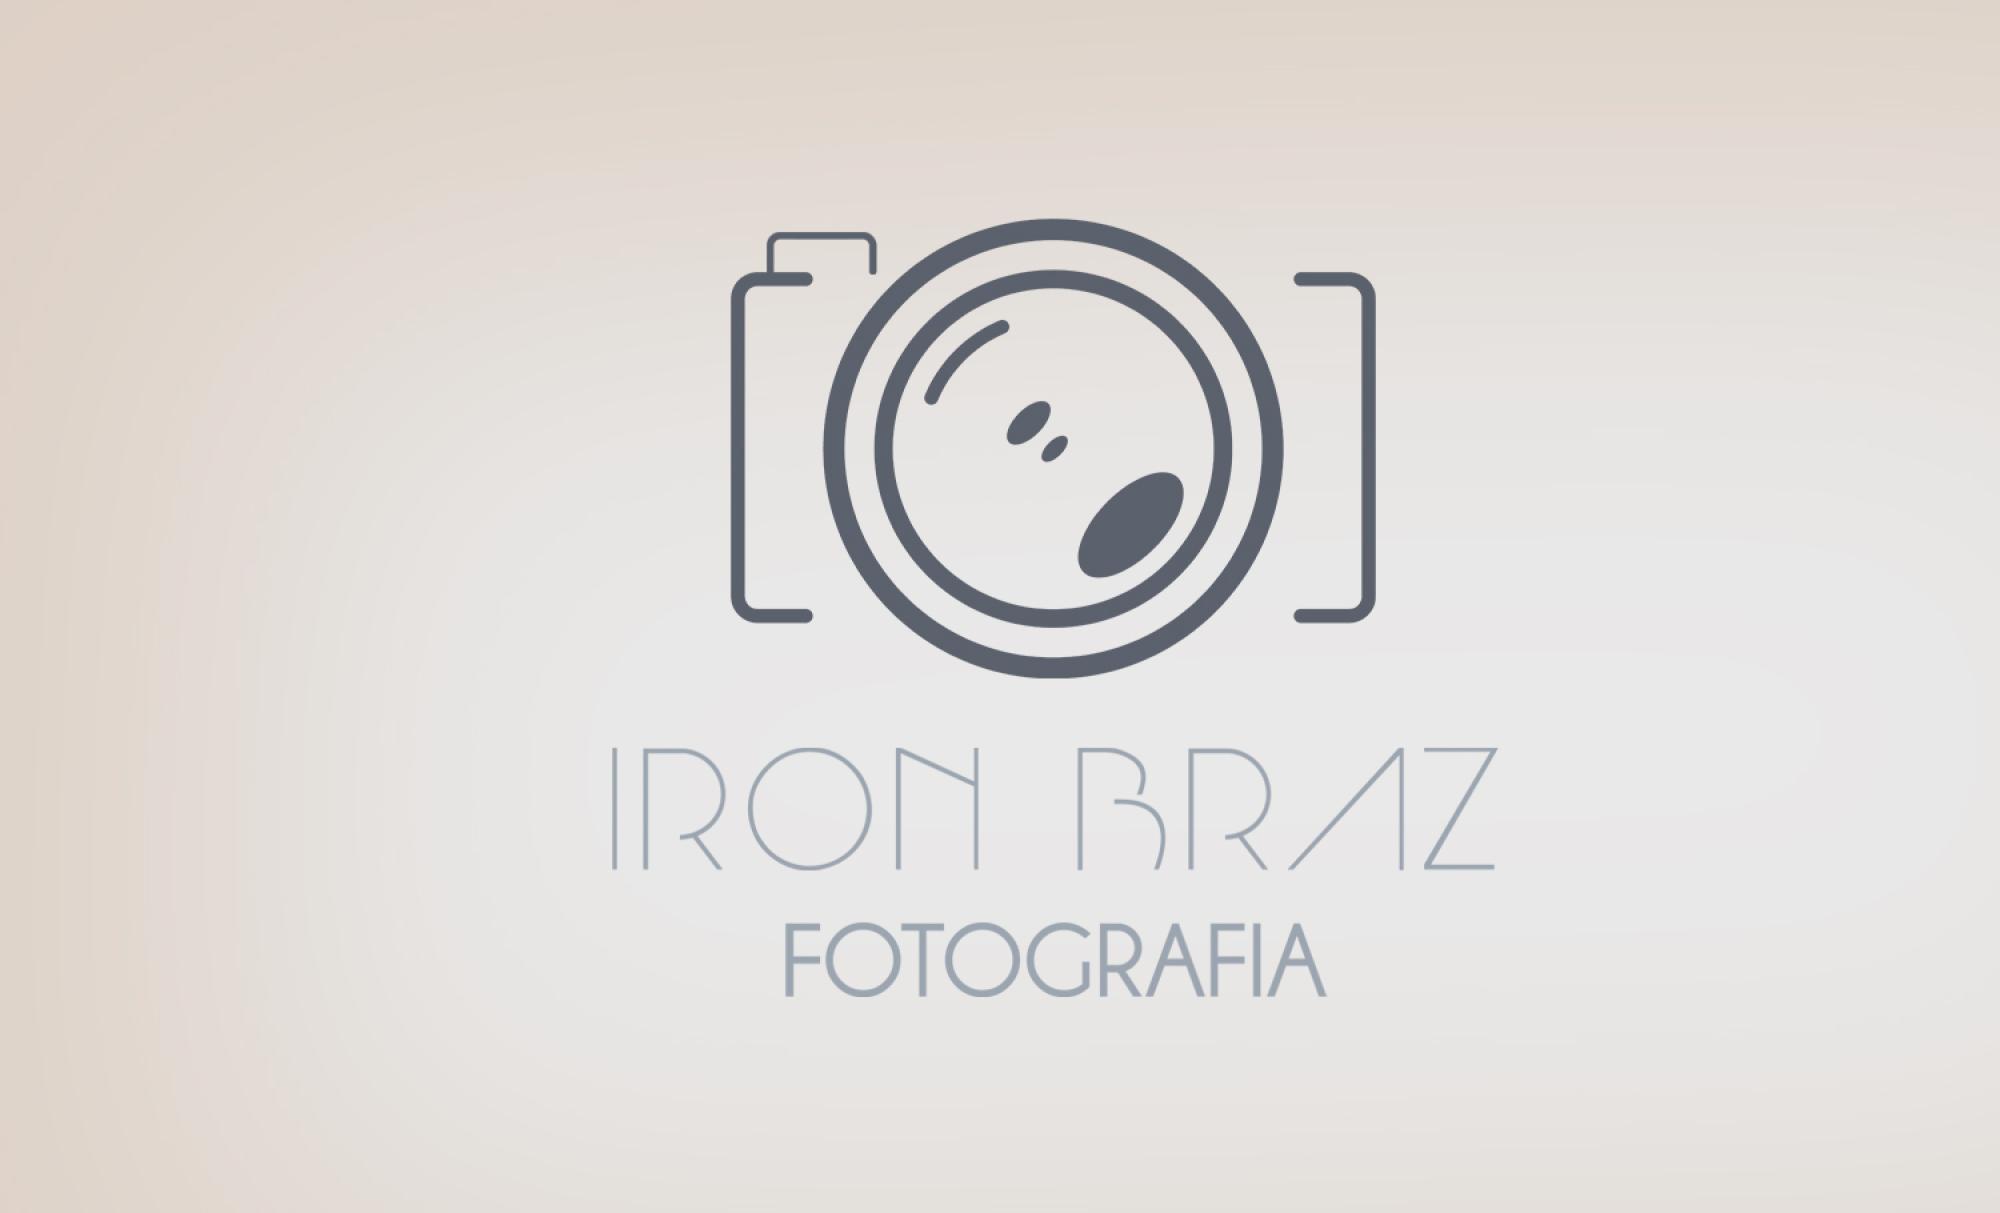 Iron Fotografia - Cliente AsWEb